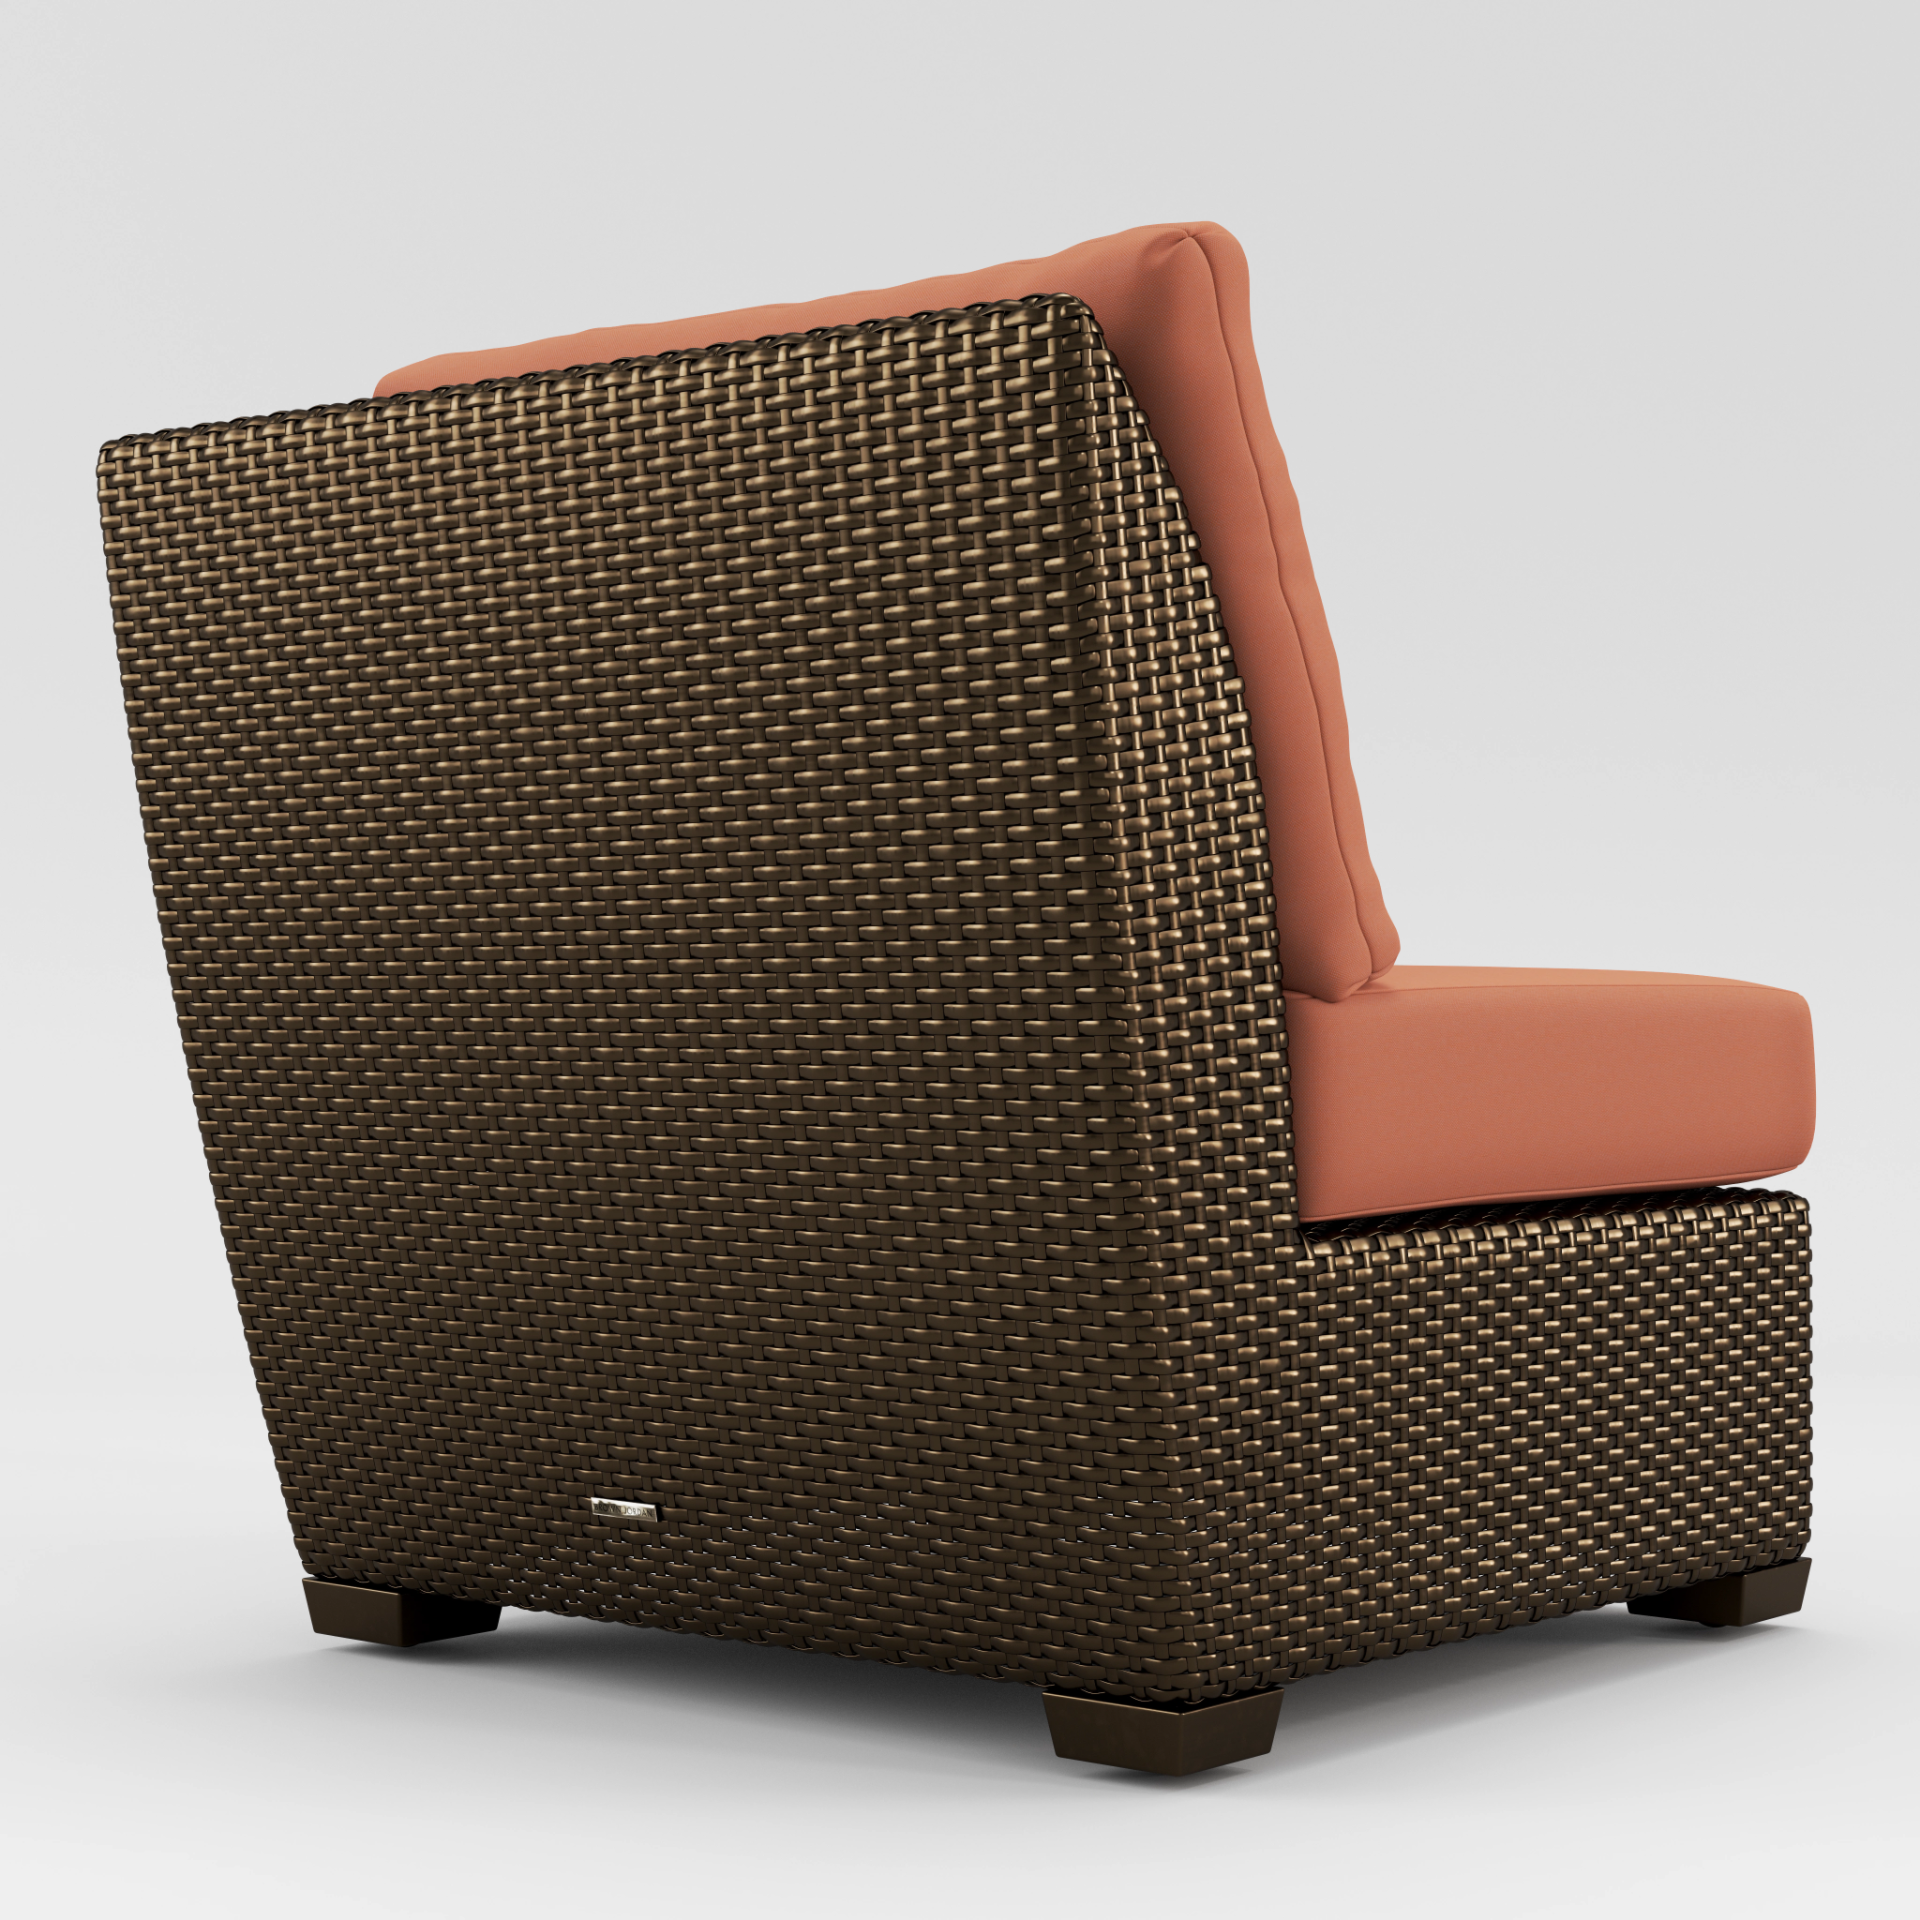 Fusion Corner Chair - Pillow Back by Brown Jordan